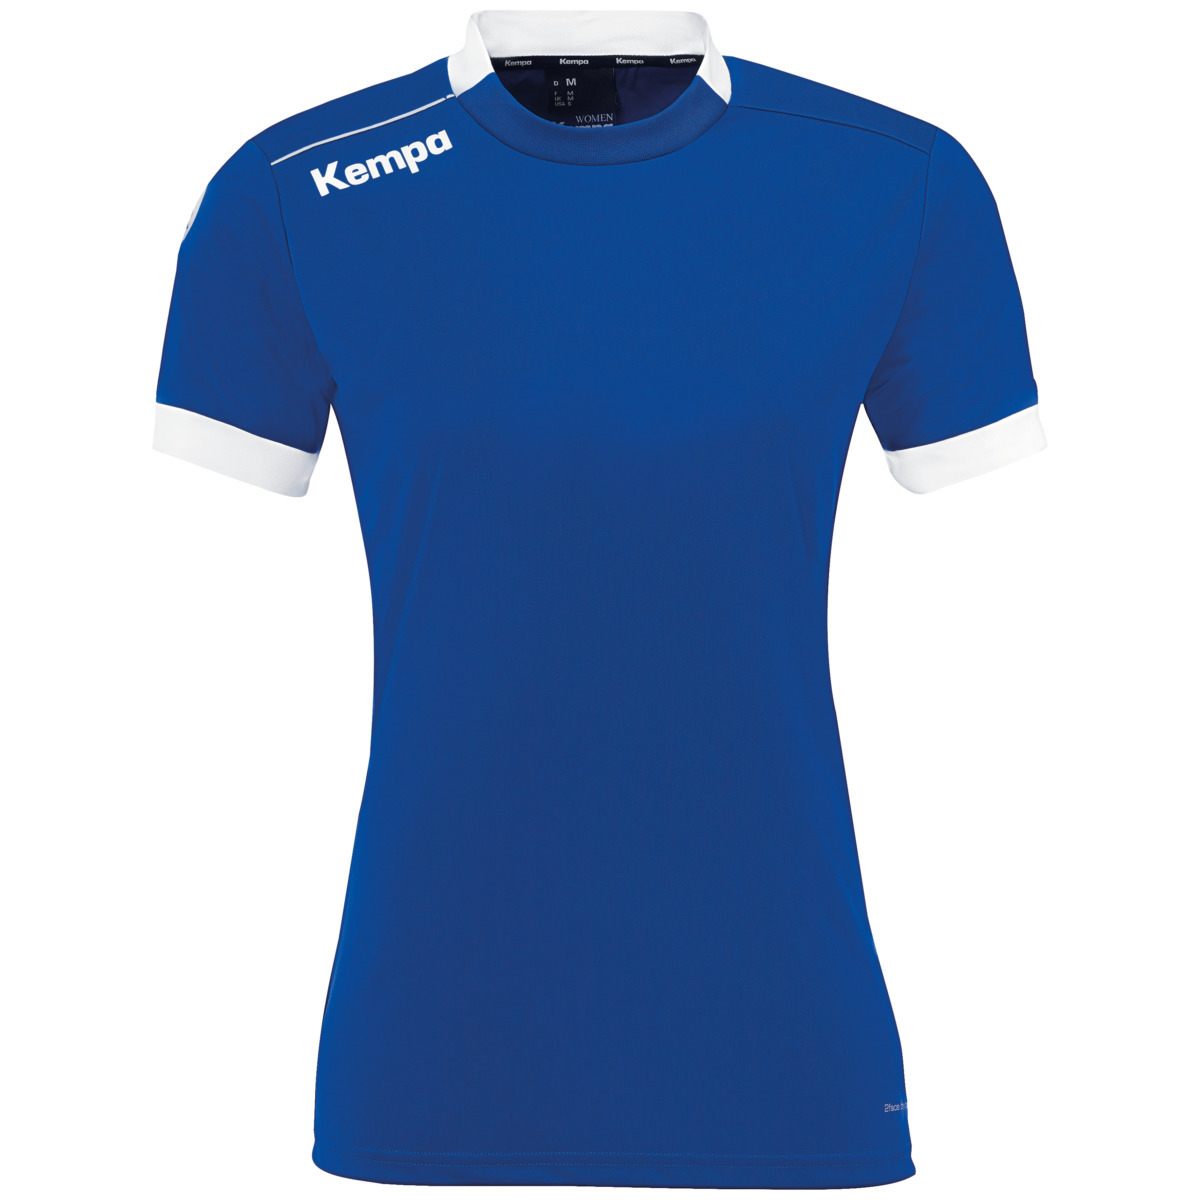 Camiseta Maillot Kempa Player - azul-blanco - 